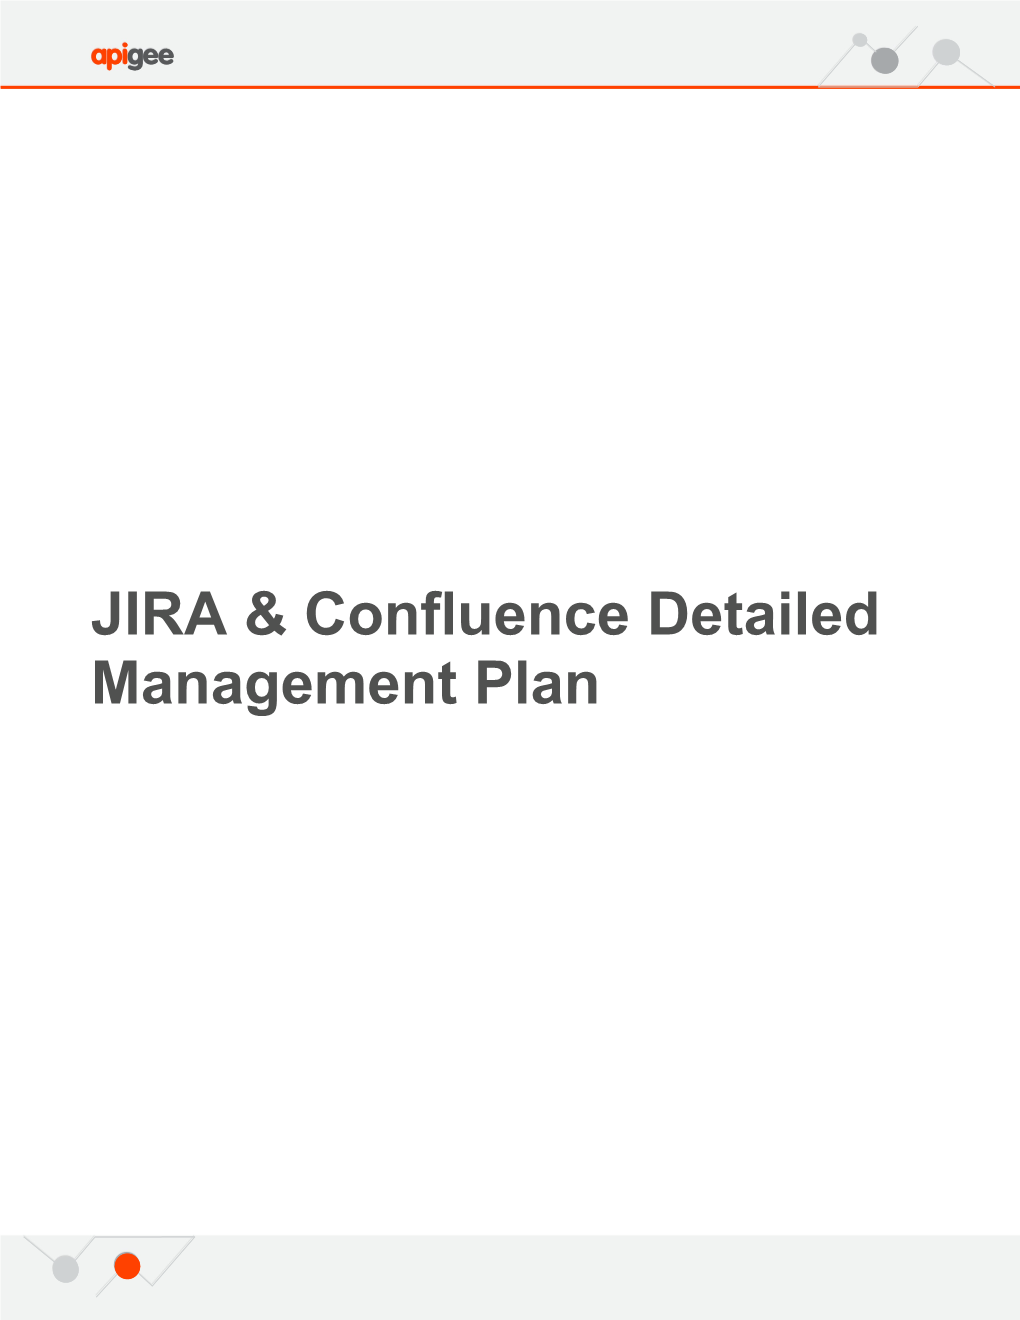 JIRA & Confluence Detailed Management Plan